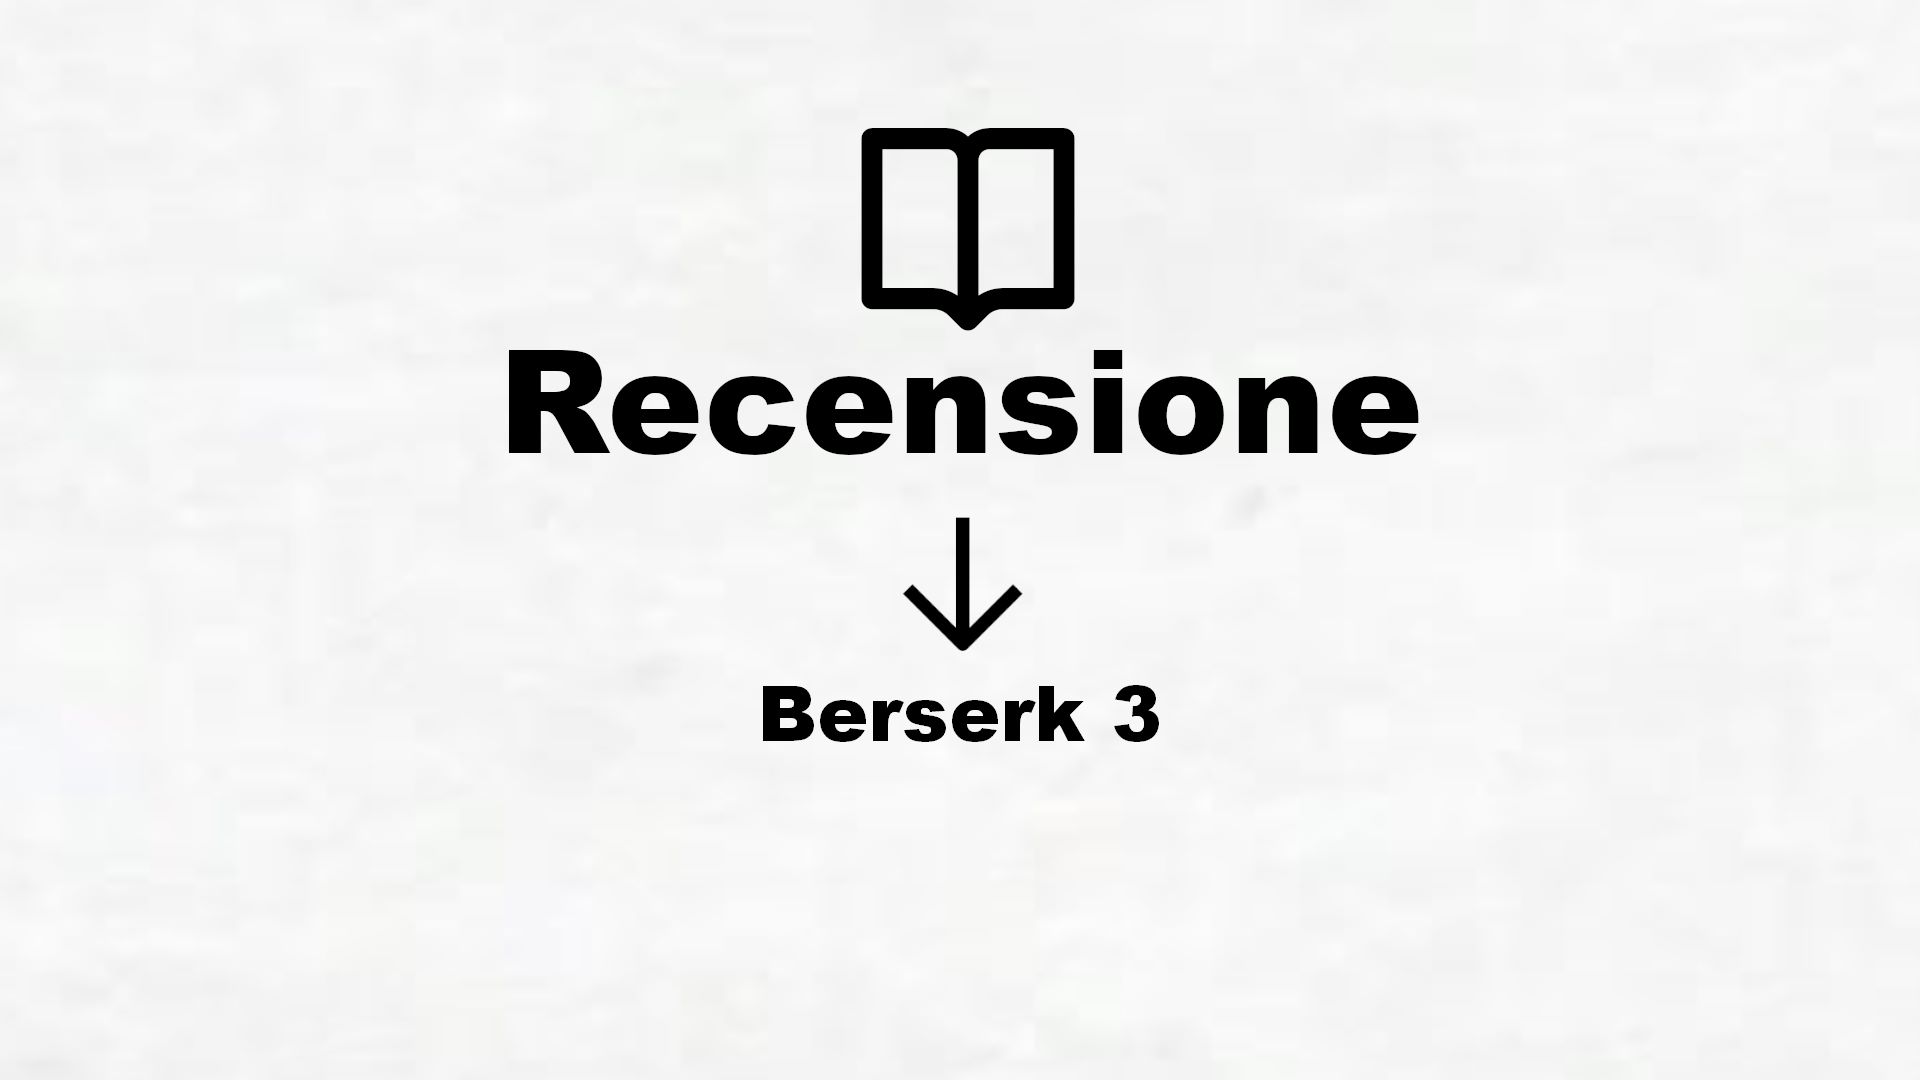 Berserk 3 – Recensione Libro